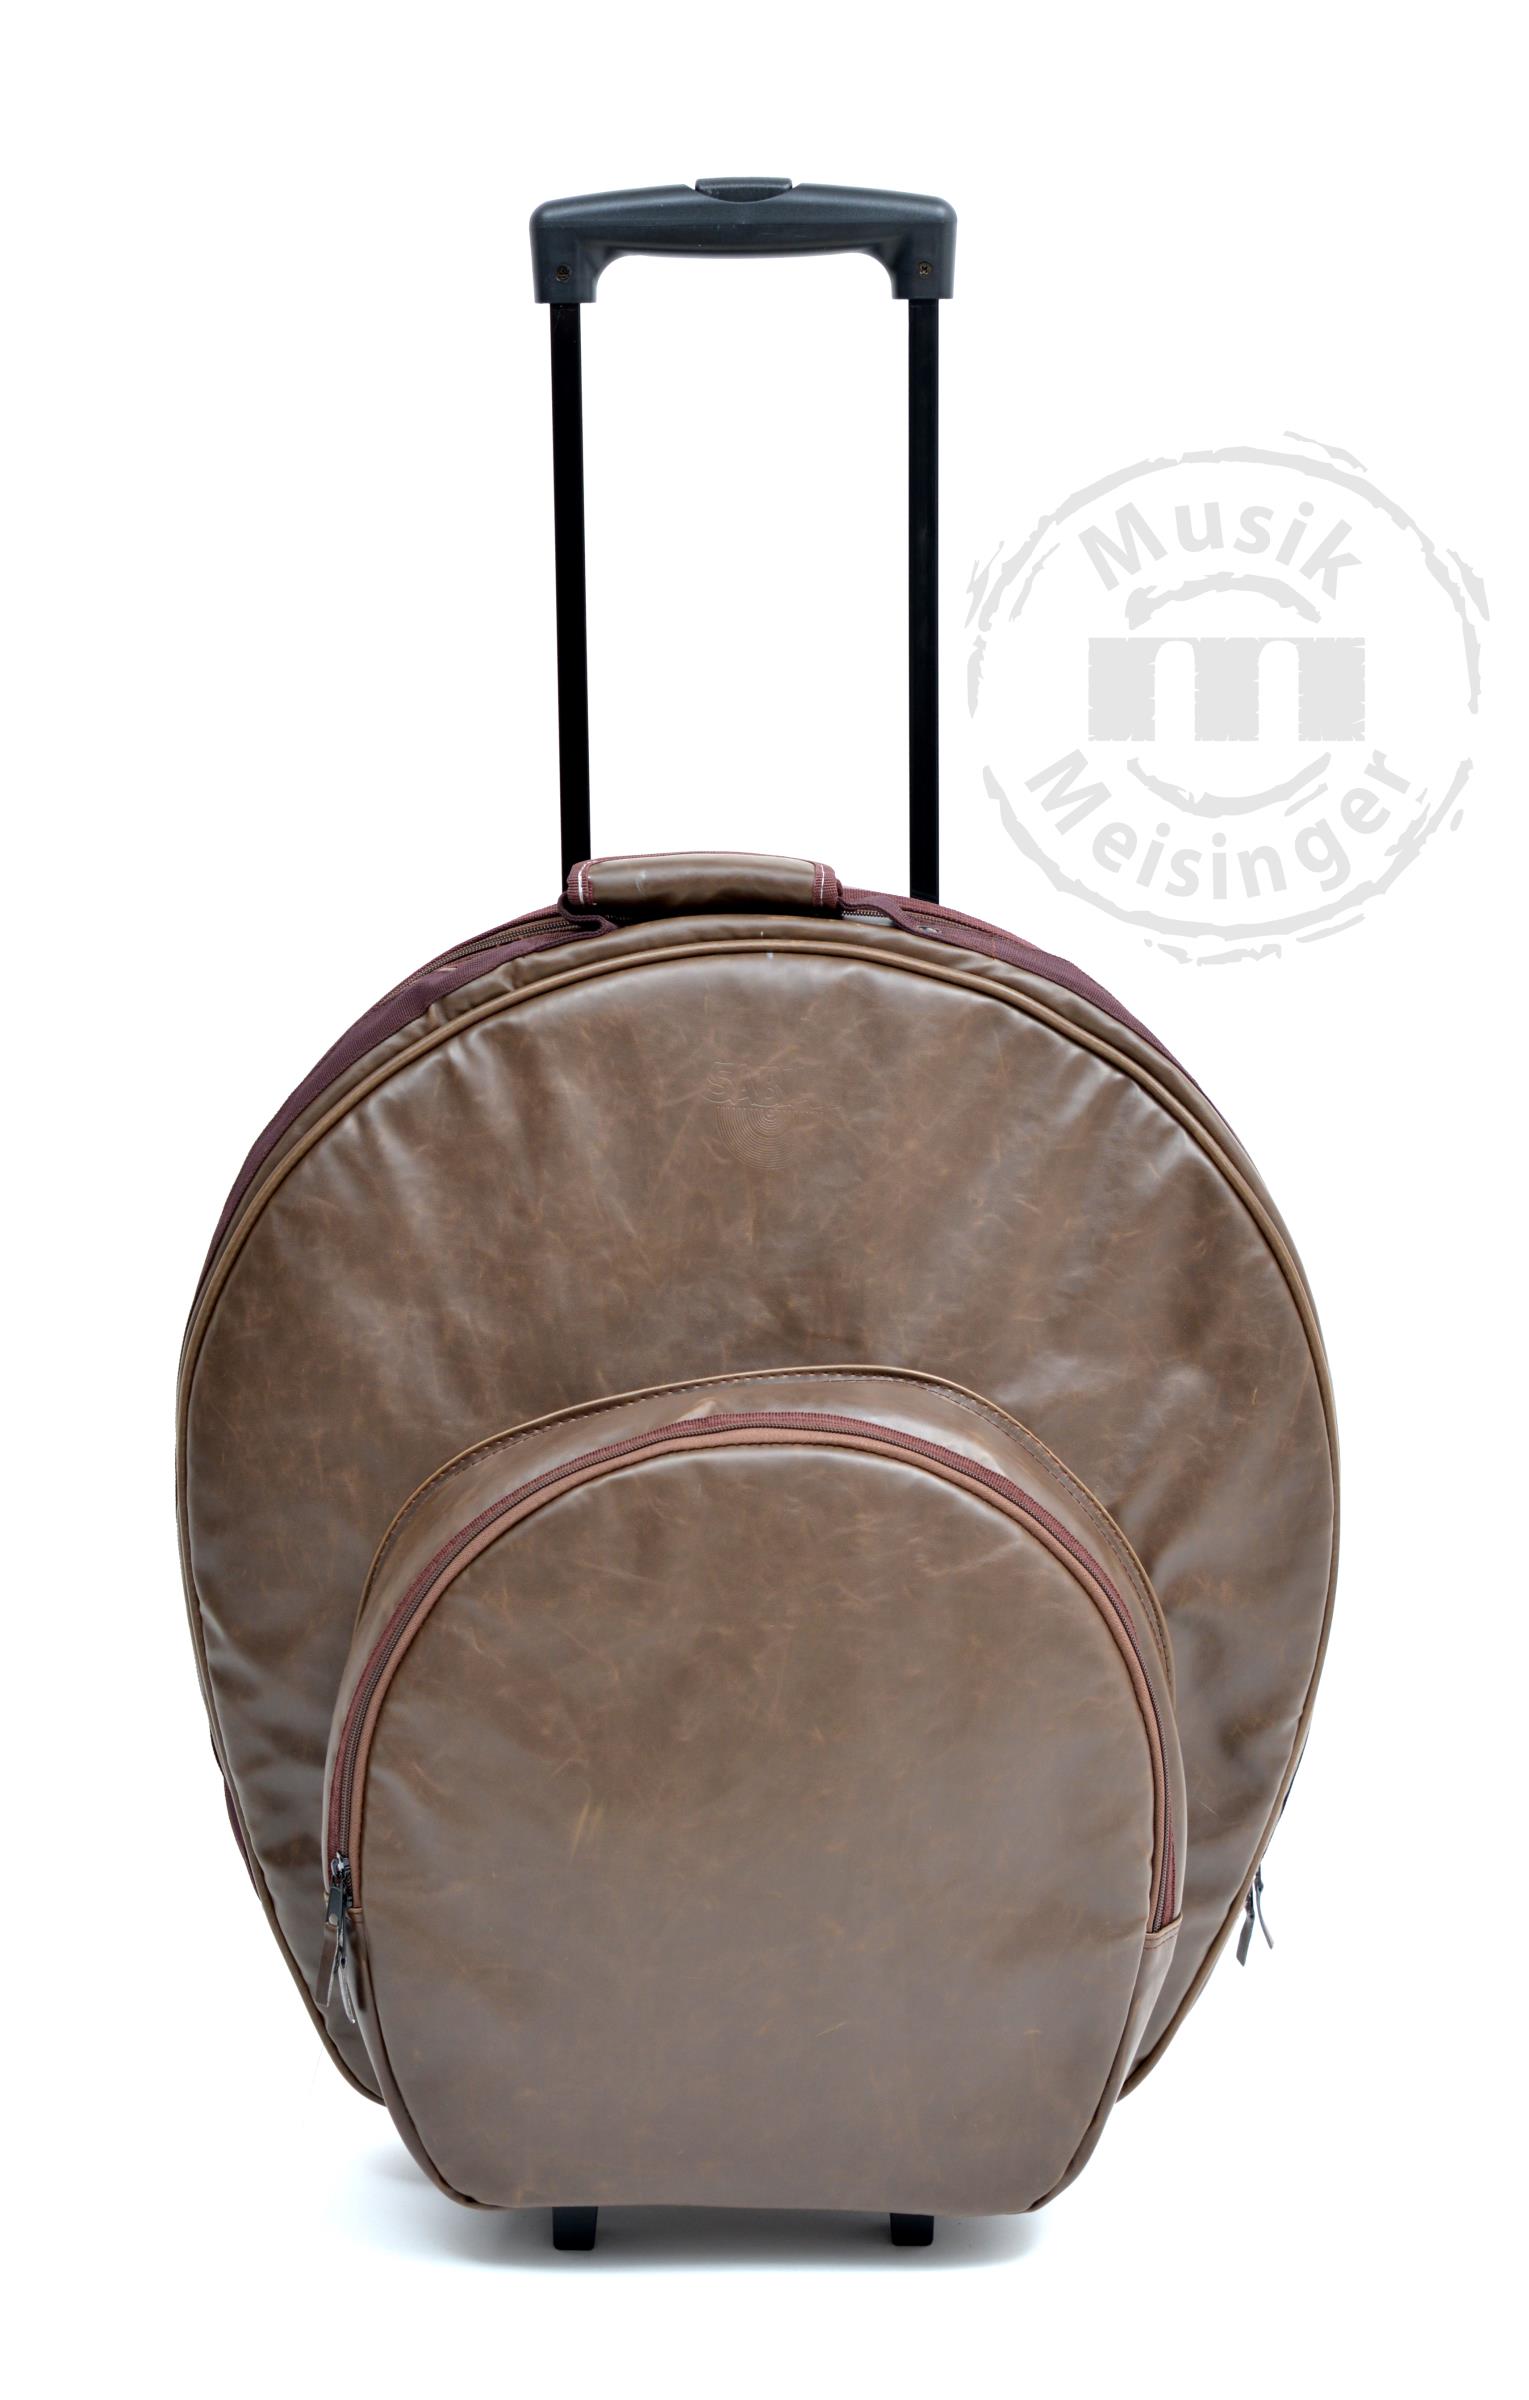 Sabian Pro Cymbal Case 24" Vintage Brown